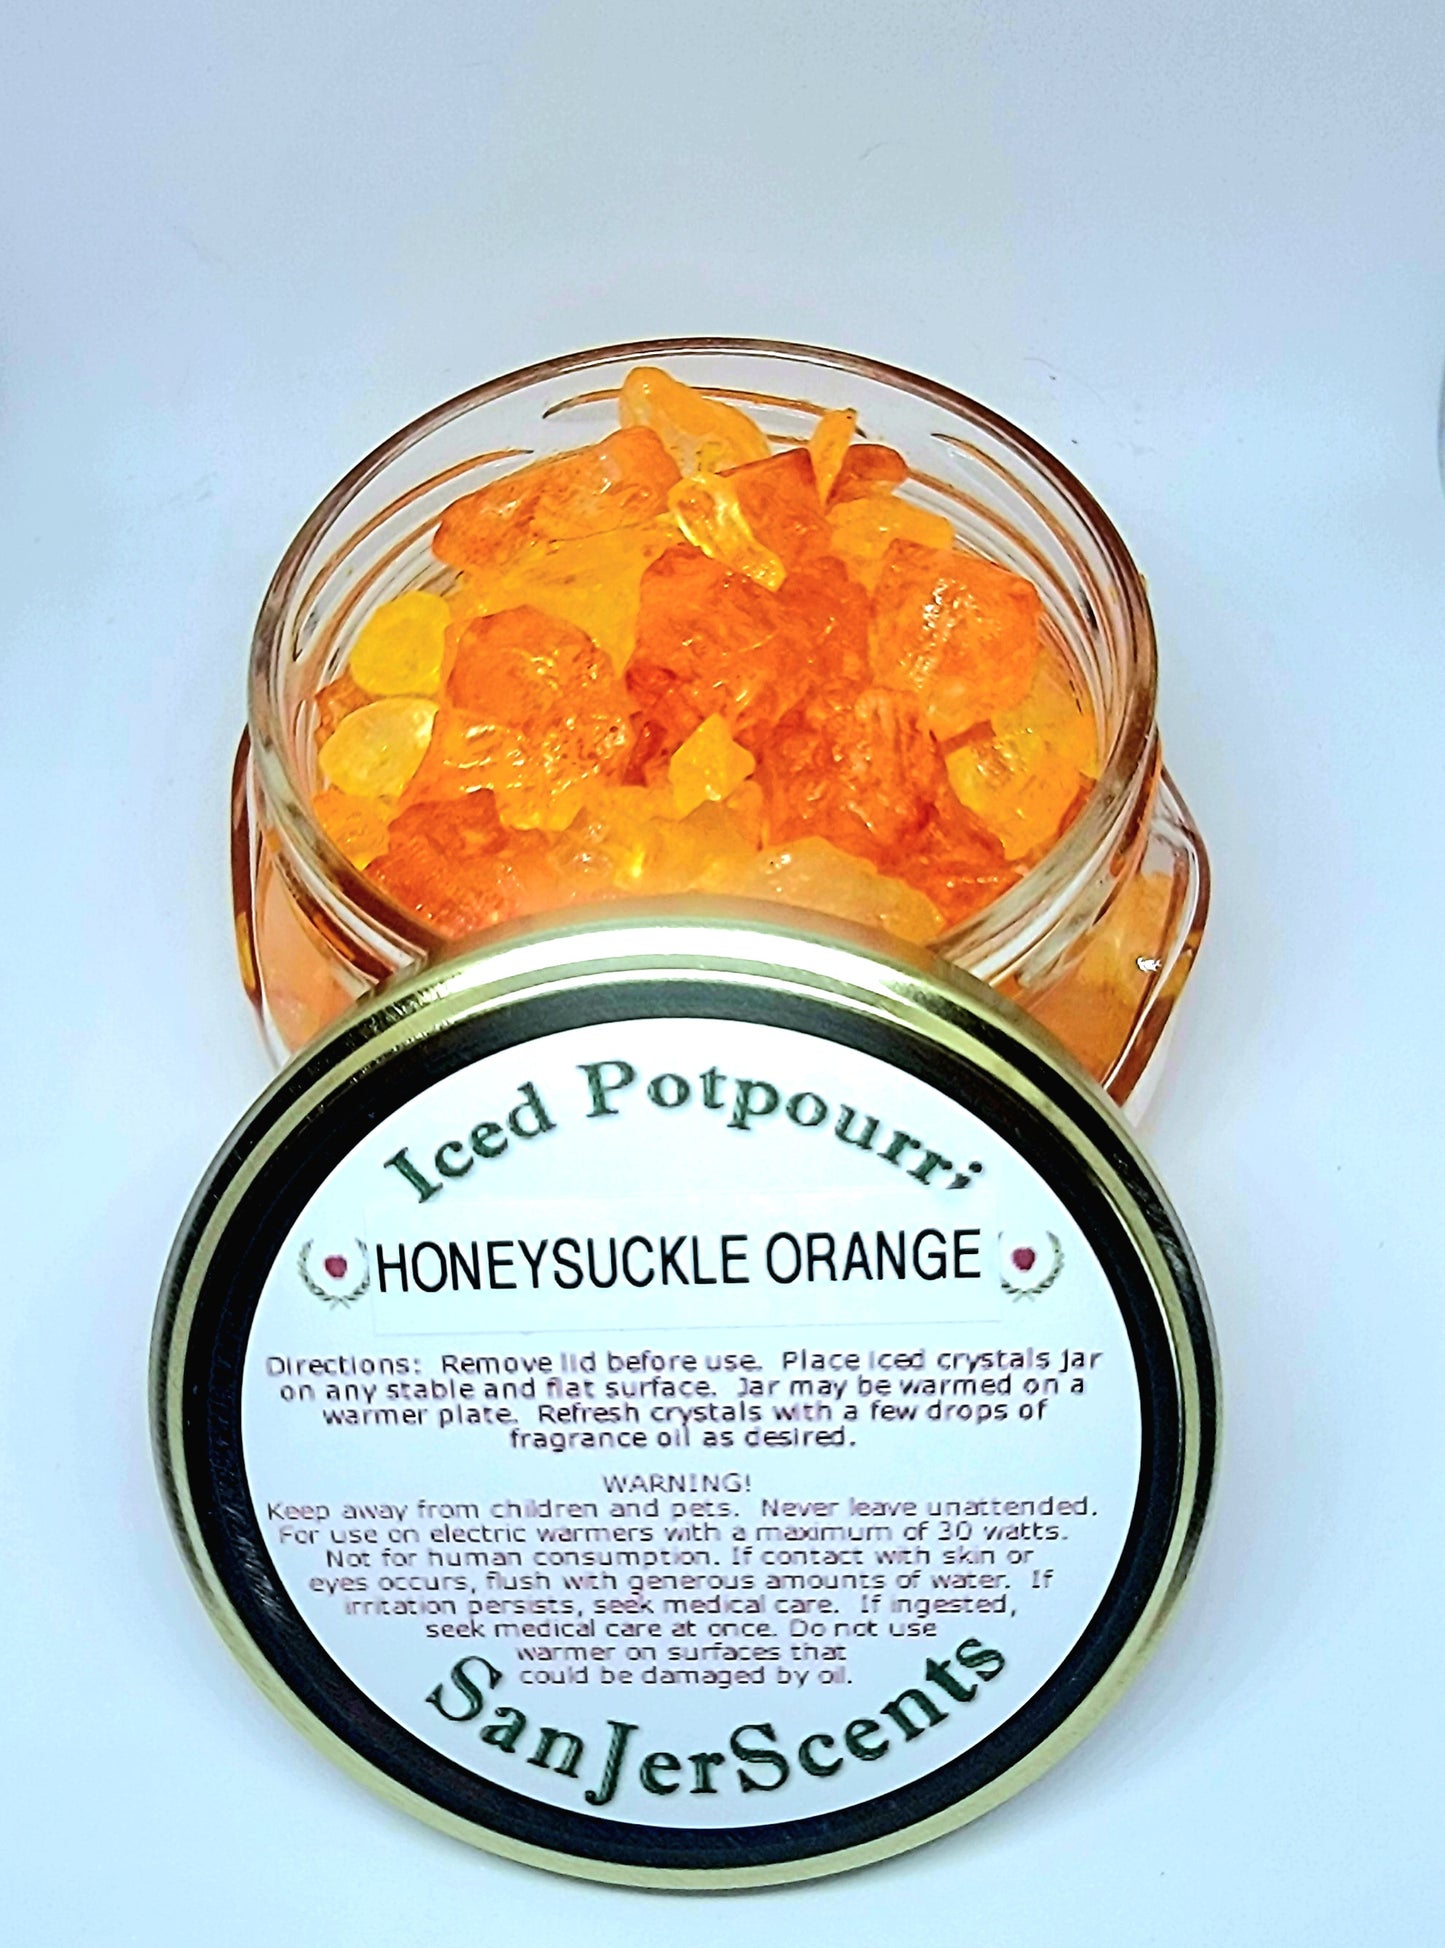 Orange and yellow large rock salt crystal potpourri in glass tureen jar with gold lid.  Honeysuckle Orange scent.